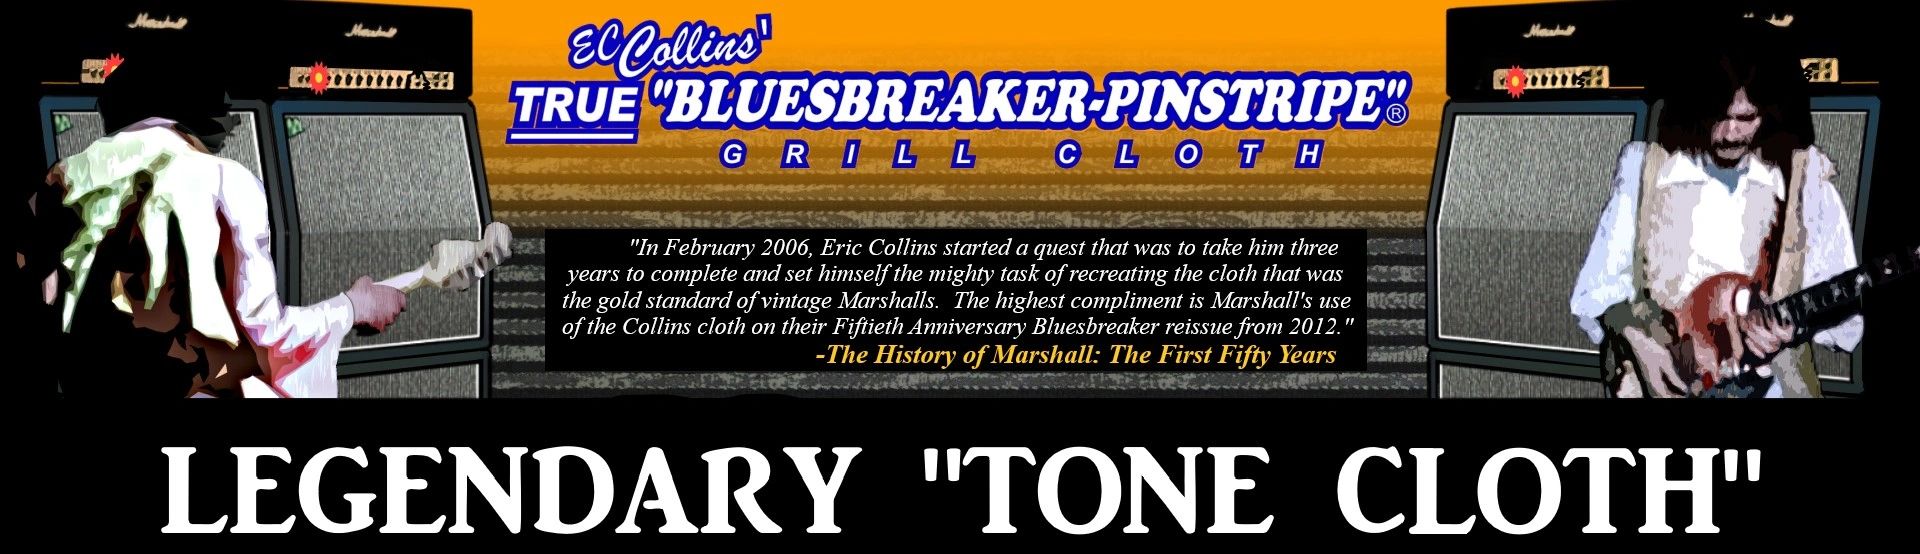 bluesbreaker-pinstripe.com